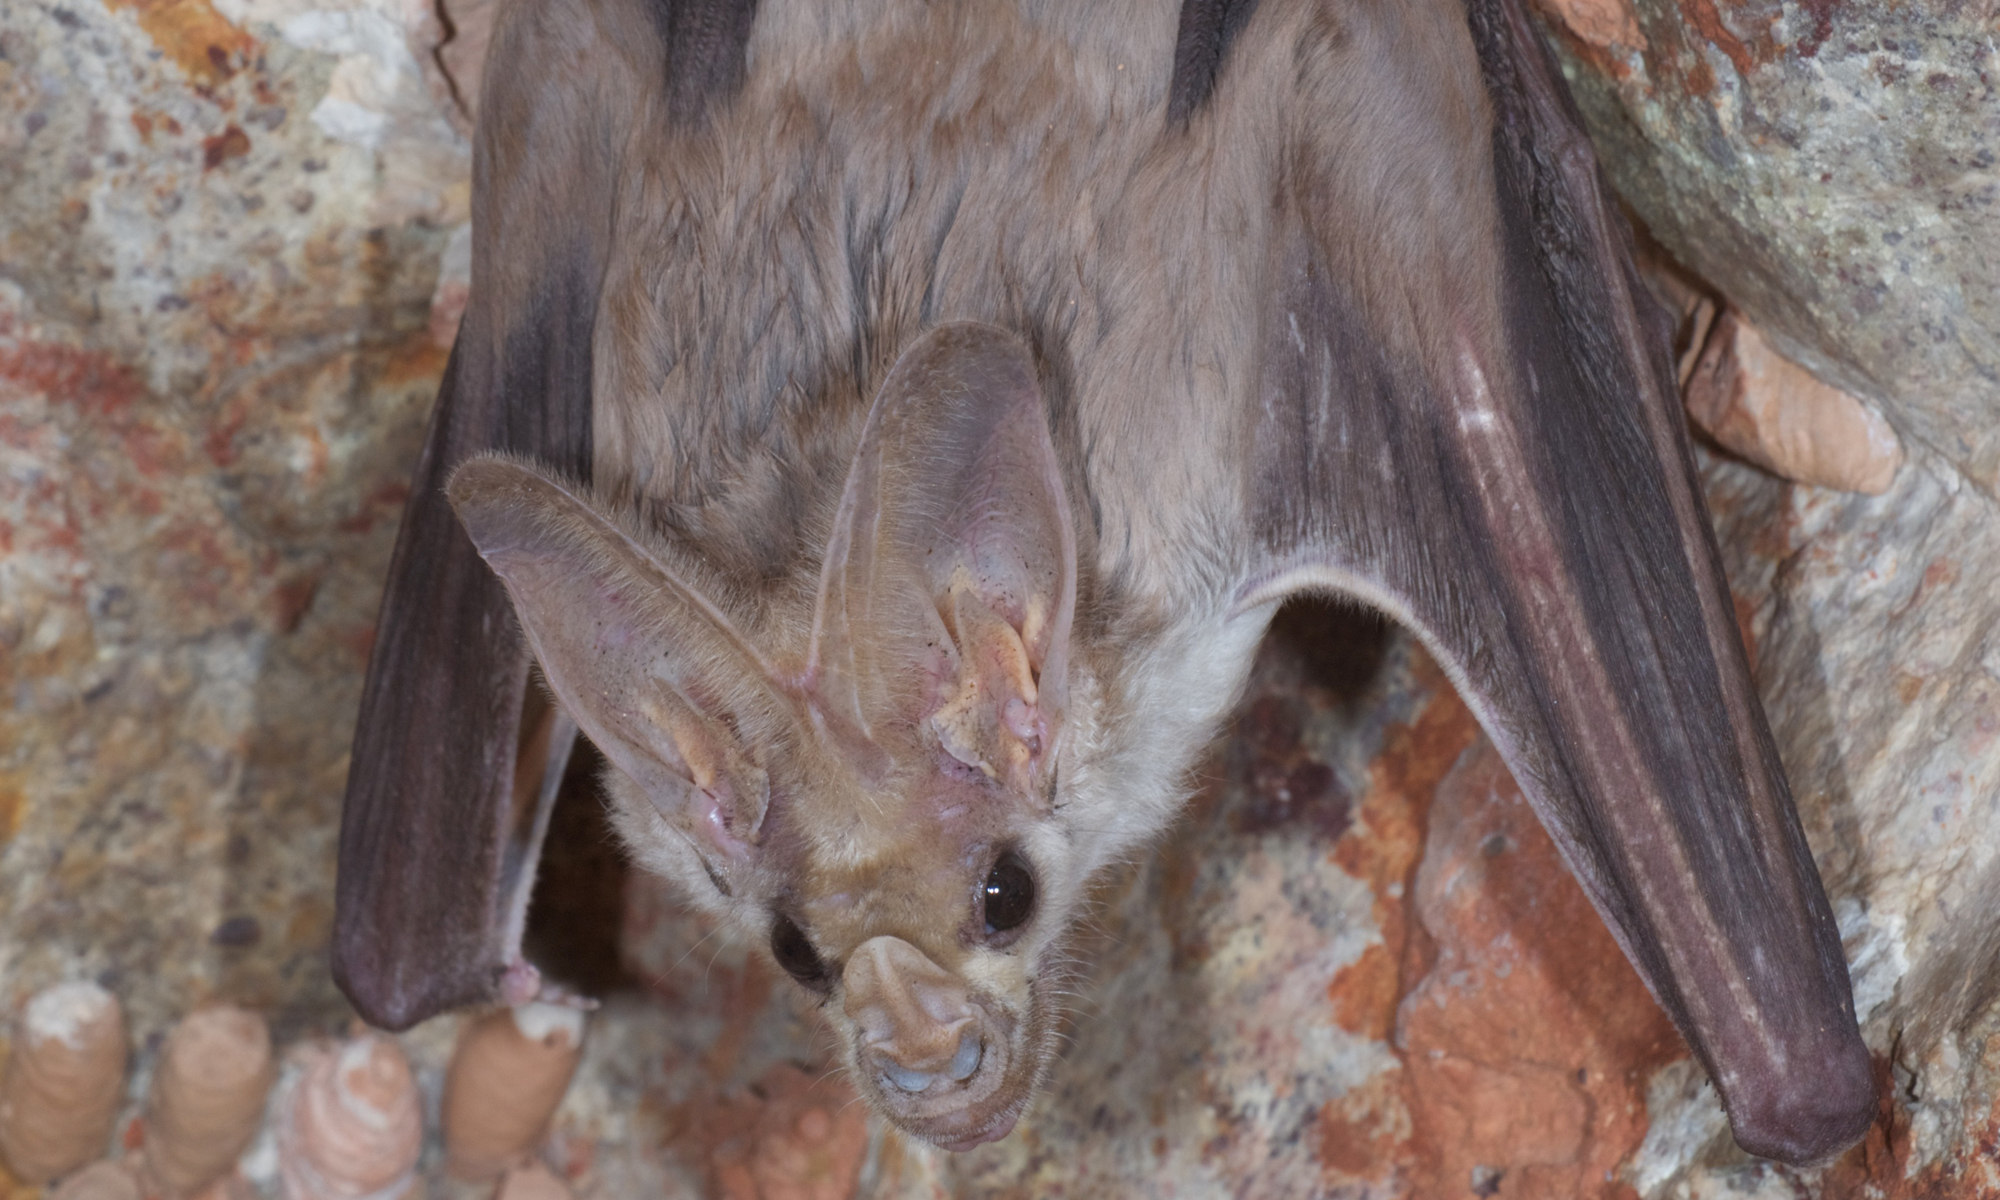 Ghost bat - All About Bats